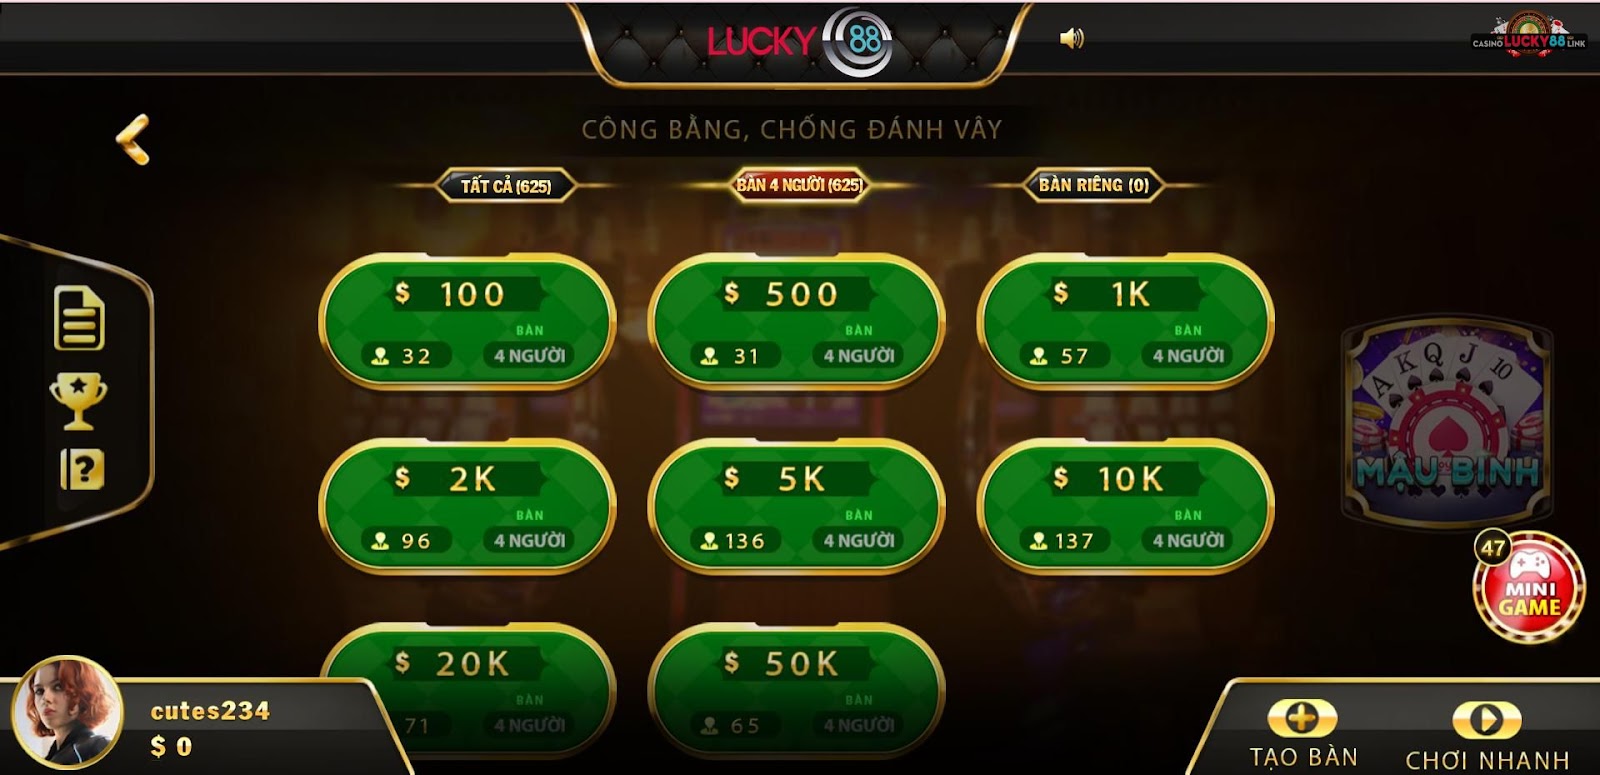 Giới thiệu game bài mậu binh Lucky88